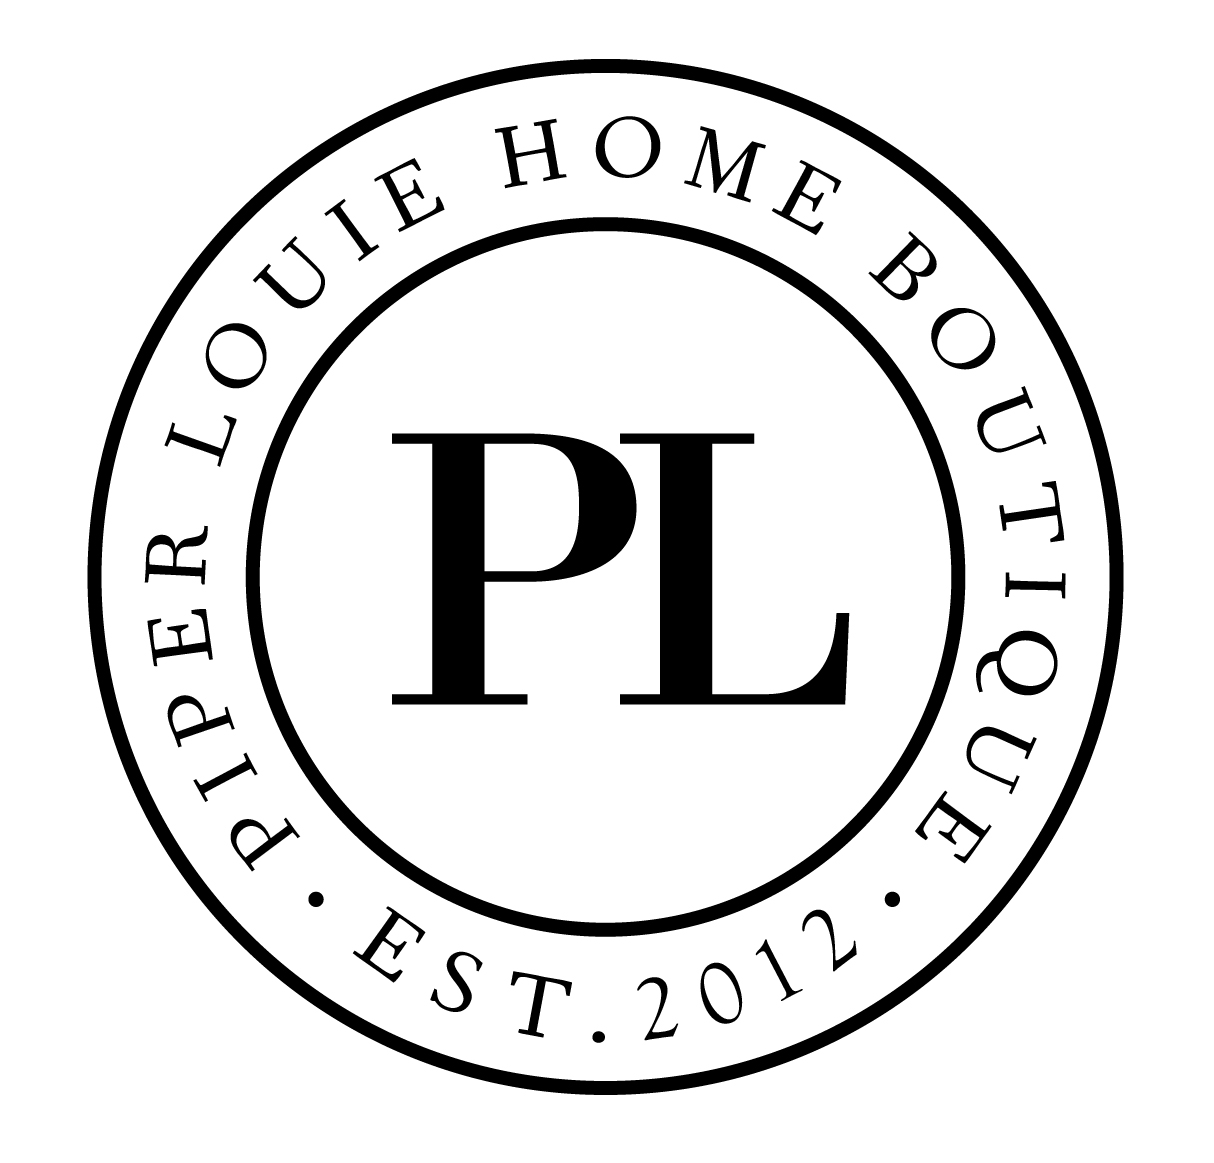 Piper Louie Home Boutique